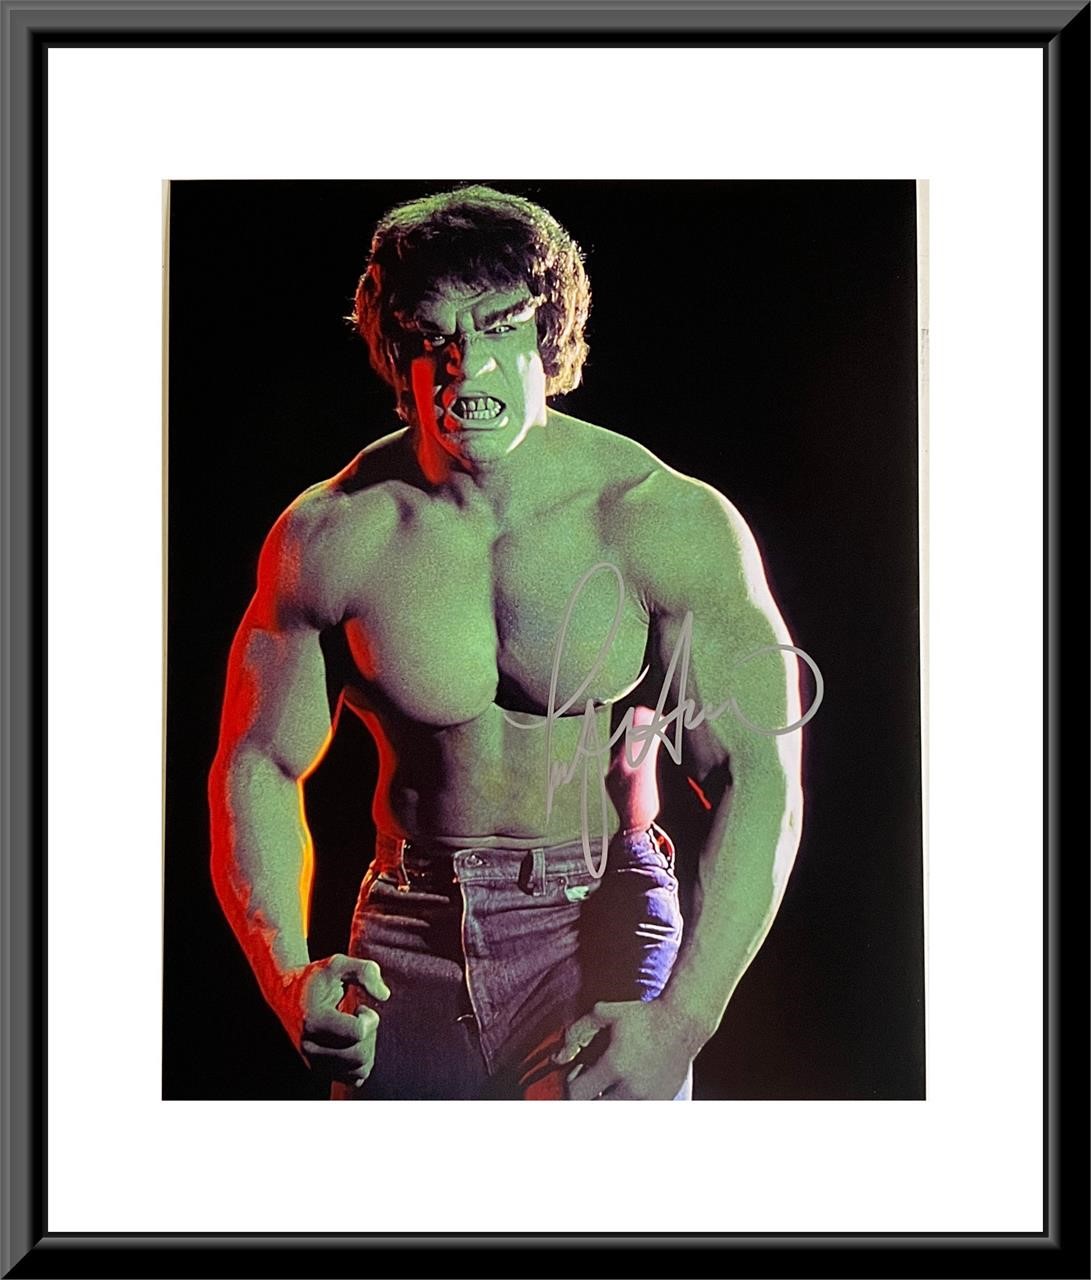 Incredible Hulk Lou Ferrigno signed photo